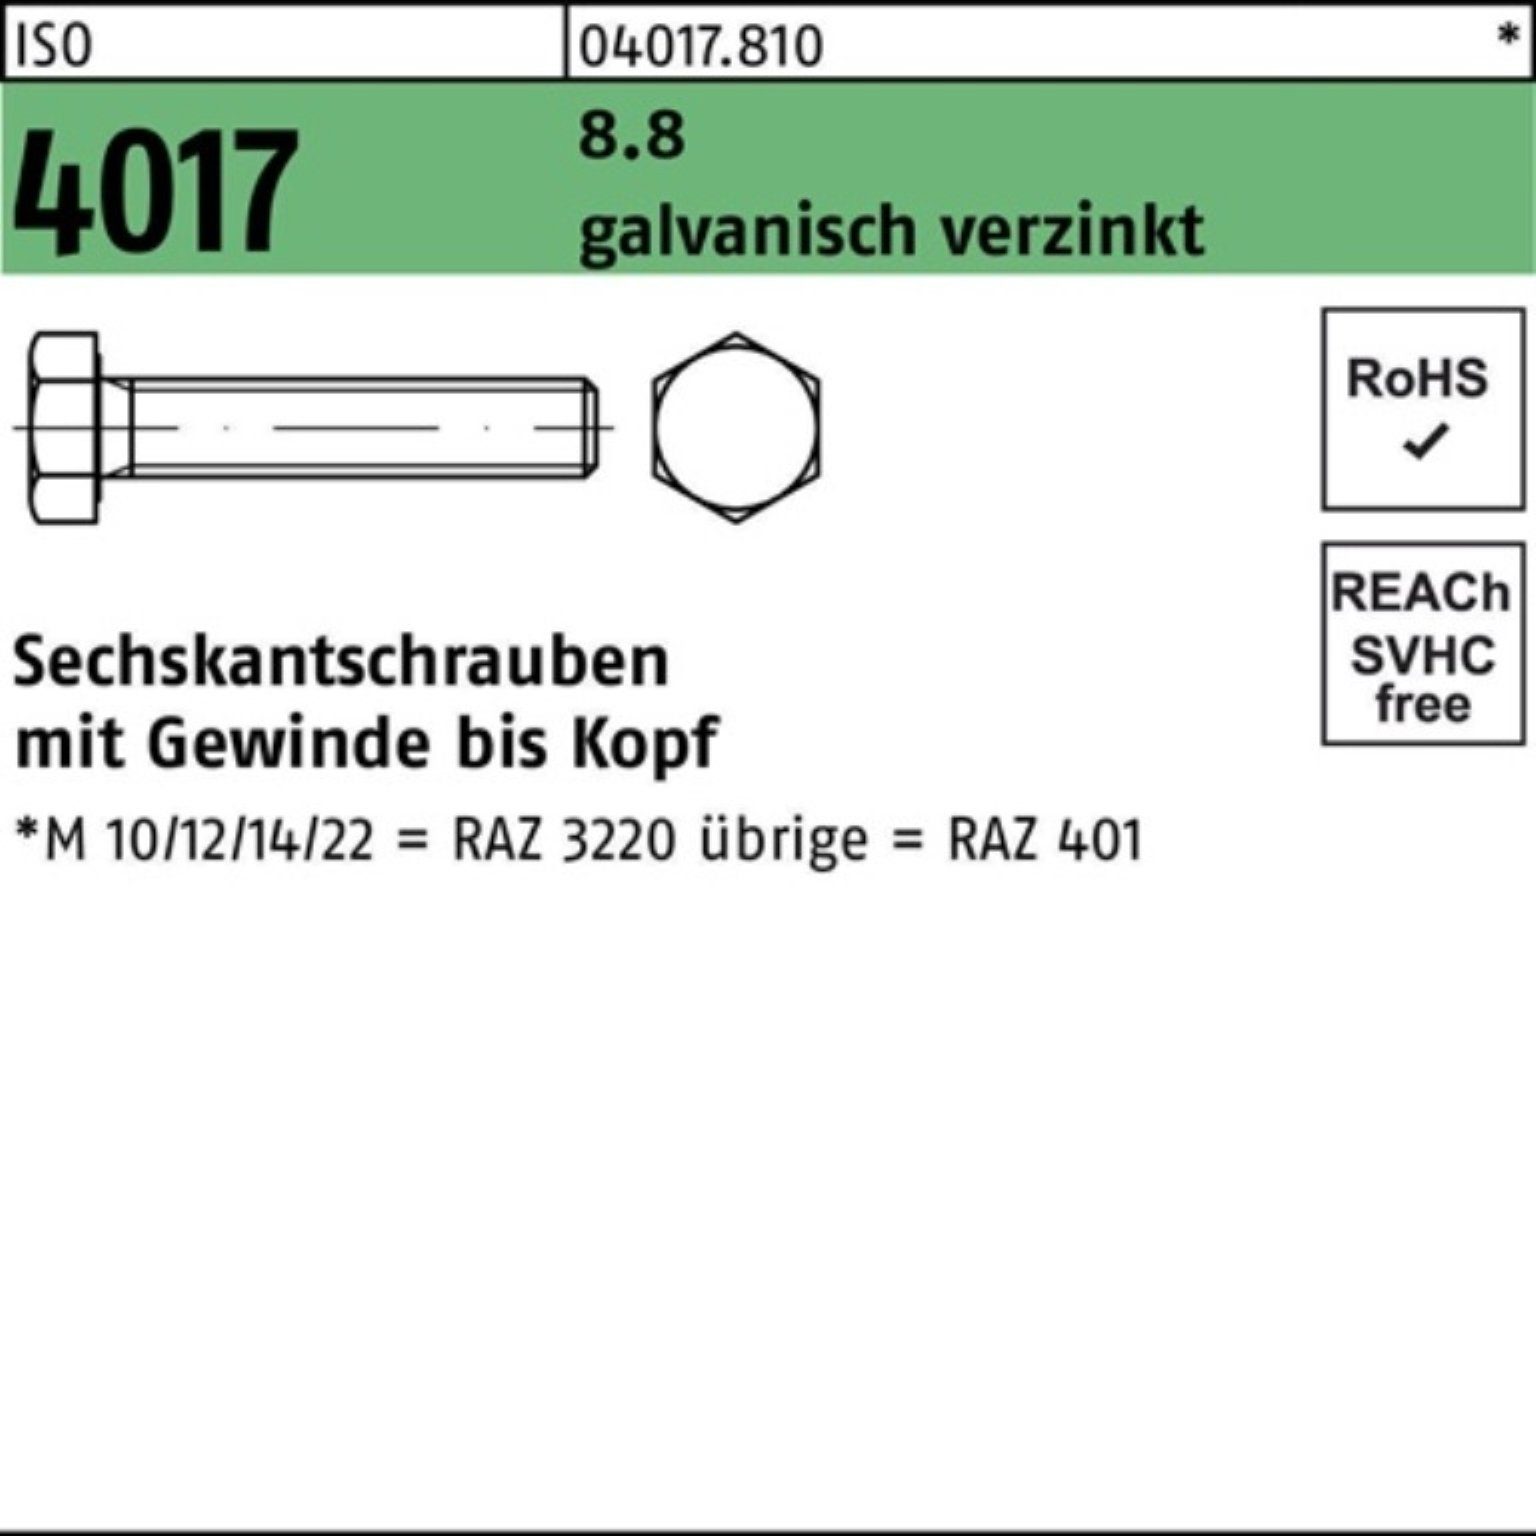 Sechskantschraube Bufab Sechskantschraube 1 Stü VG 55 Pack M30x 4017 100er ISO galv.verz. 8.8